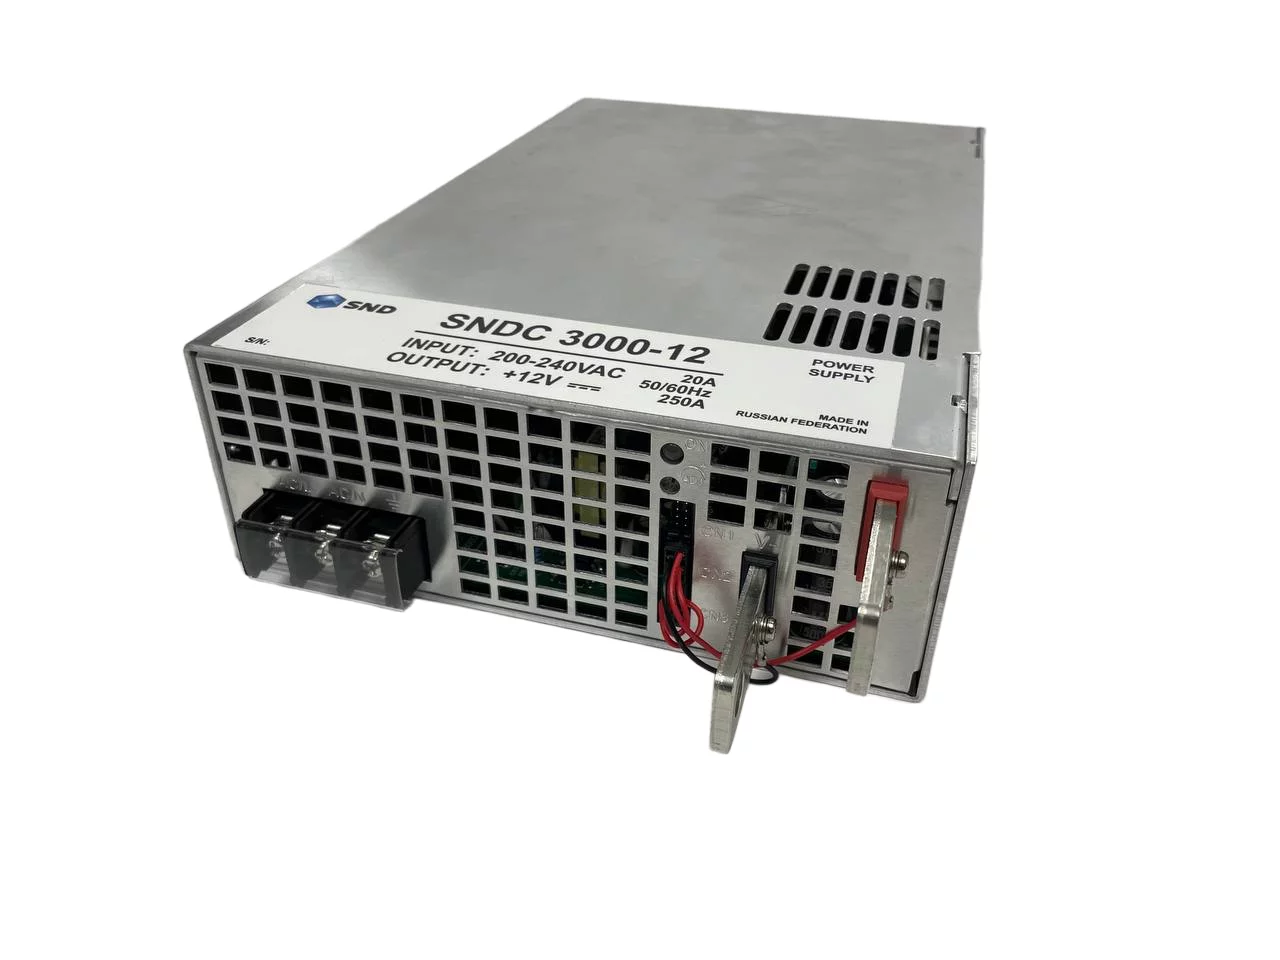 SNDC 3000-12 power supply for data centers